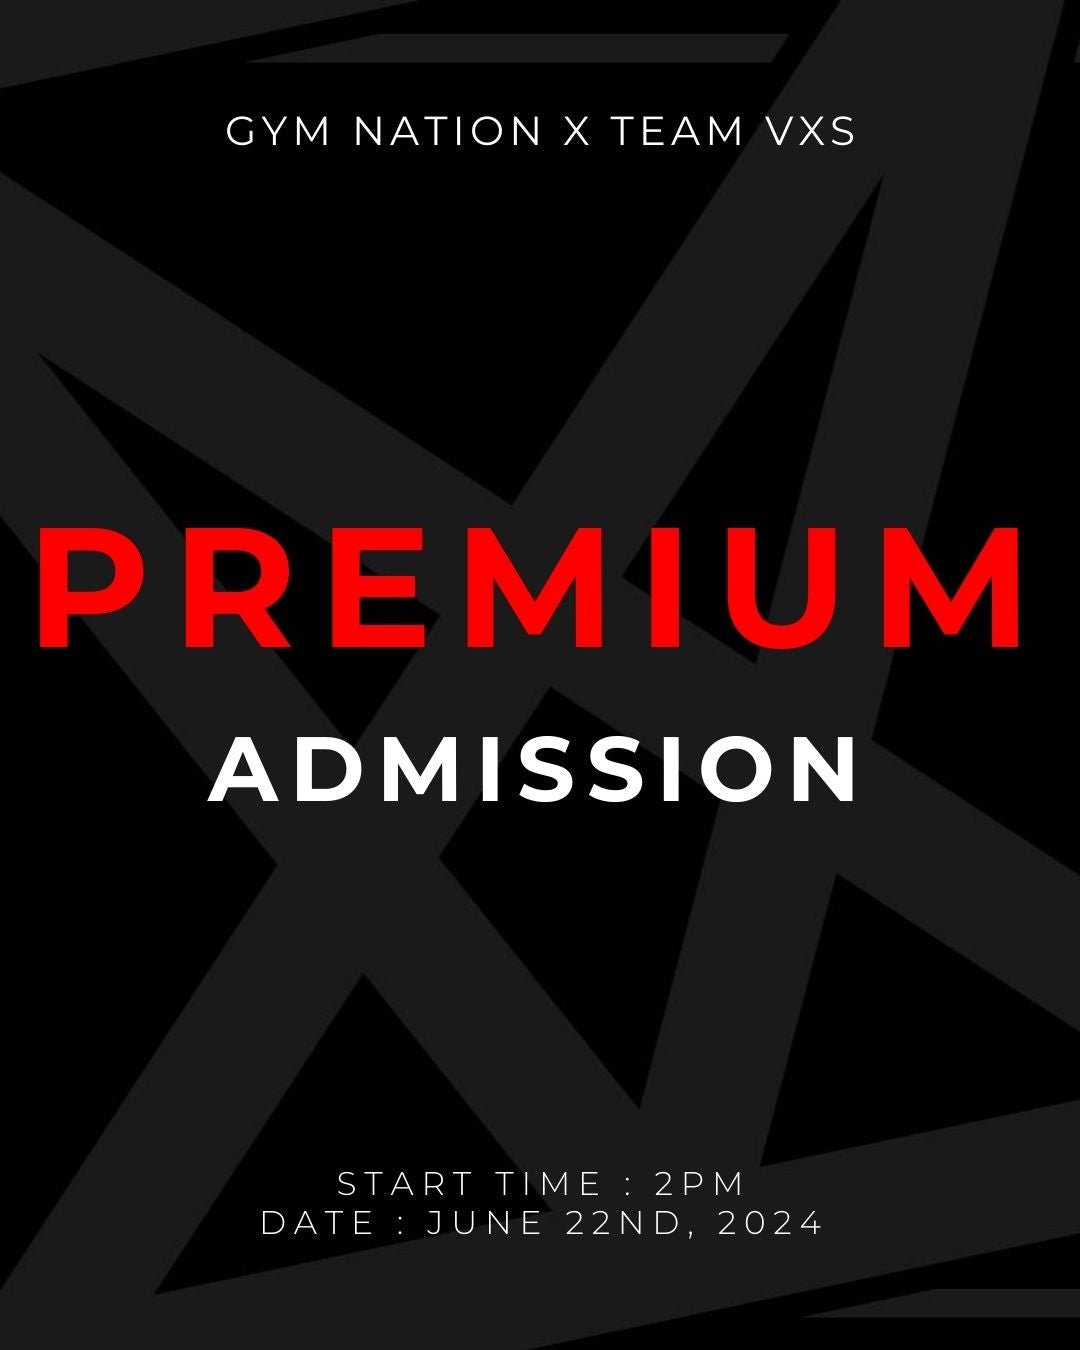 PREMIUM ADMISSION - Team VXS X Gym Nation Event - VXS GYM WEAR